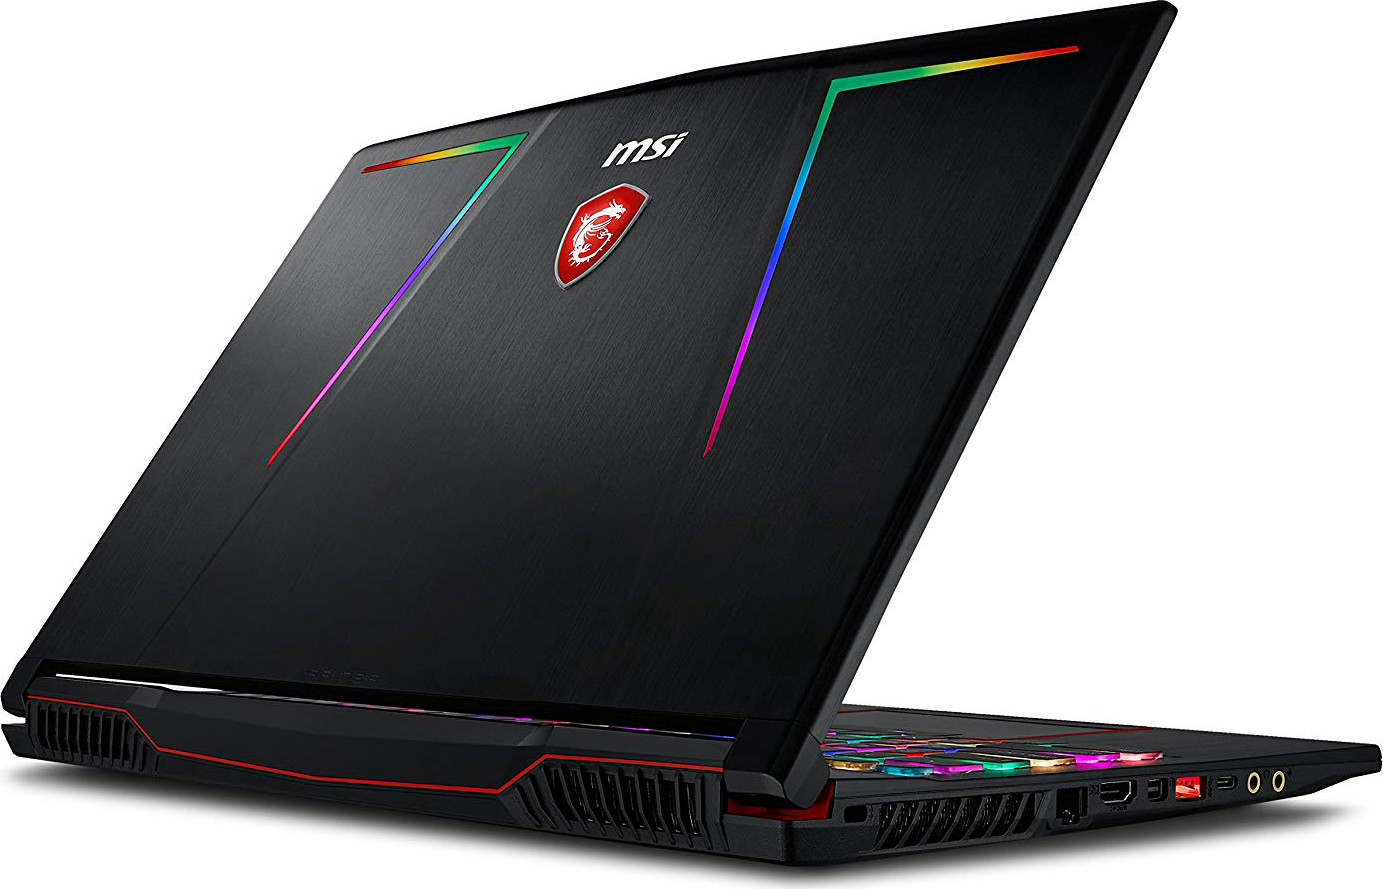 CUK MSI GE63 Raider RGB Gamer Notebook (Intel i7-8750H, 32GB RAM, 512GB NVMe SSD + 1TB HDD, NVIDIA GeForce GTX 1060 6GB, 15.6" FHD 120Hz 3ms, Windows 10 Home) Gaming Laptop Computer